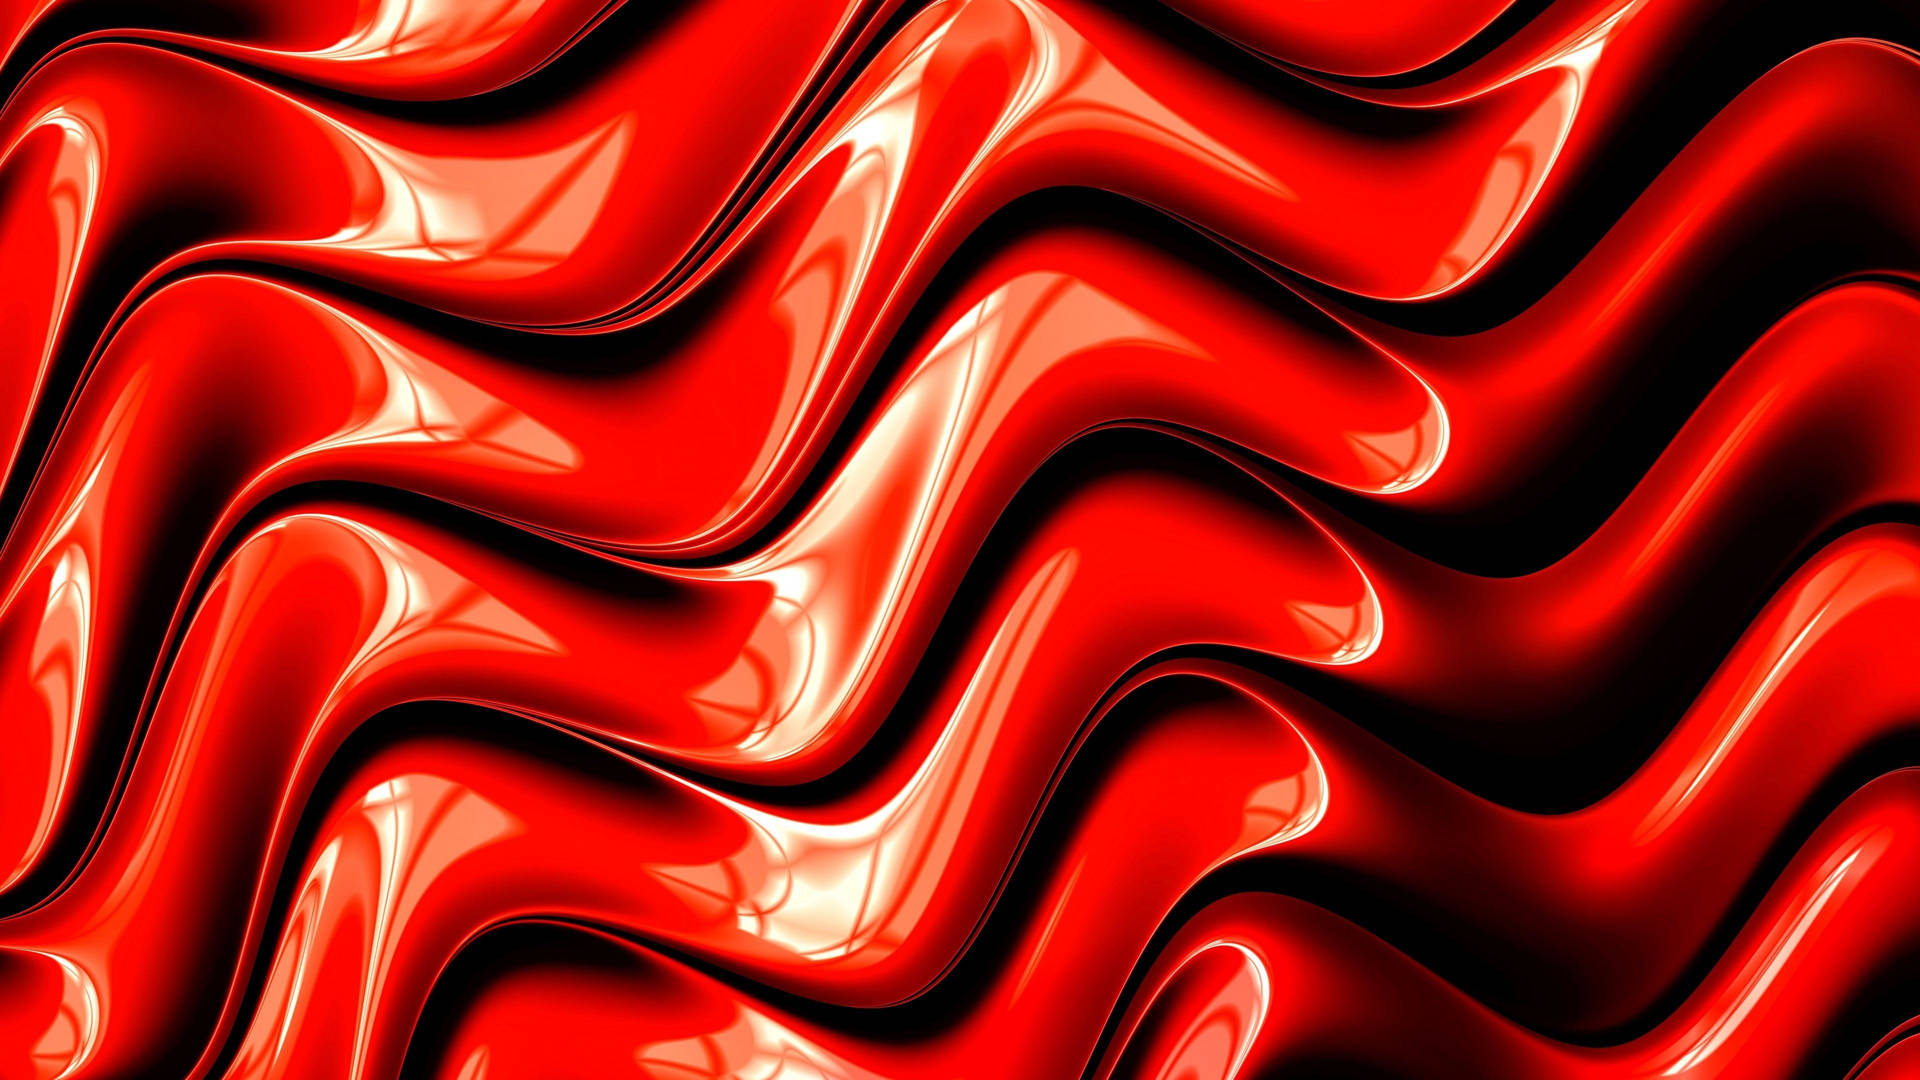 3D Red waves design wallpaper.